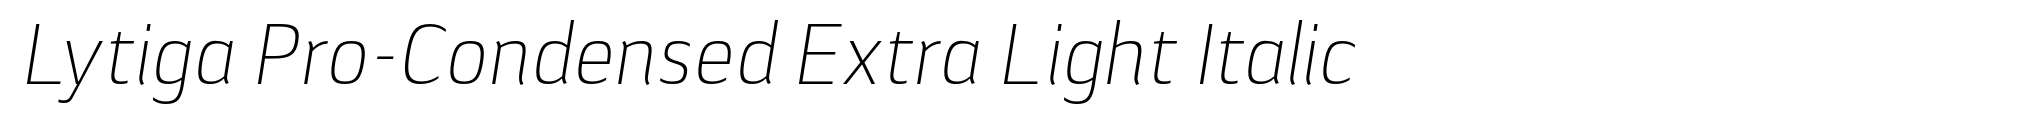 Lytiga Pro-Condensed Extra Light Italic image